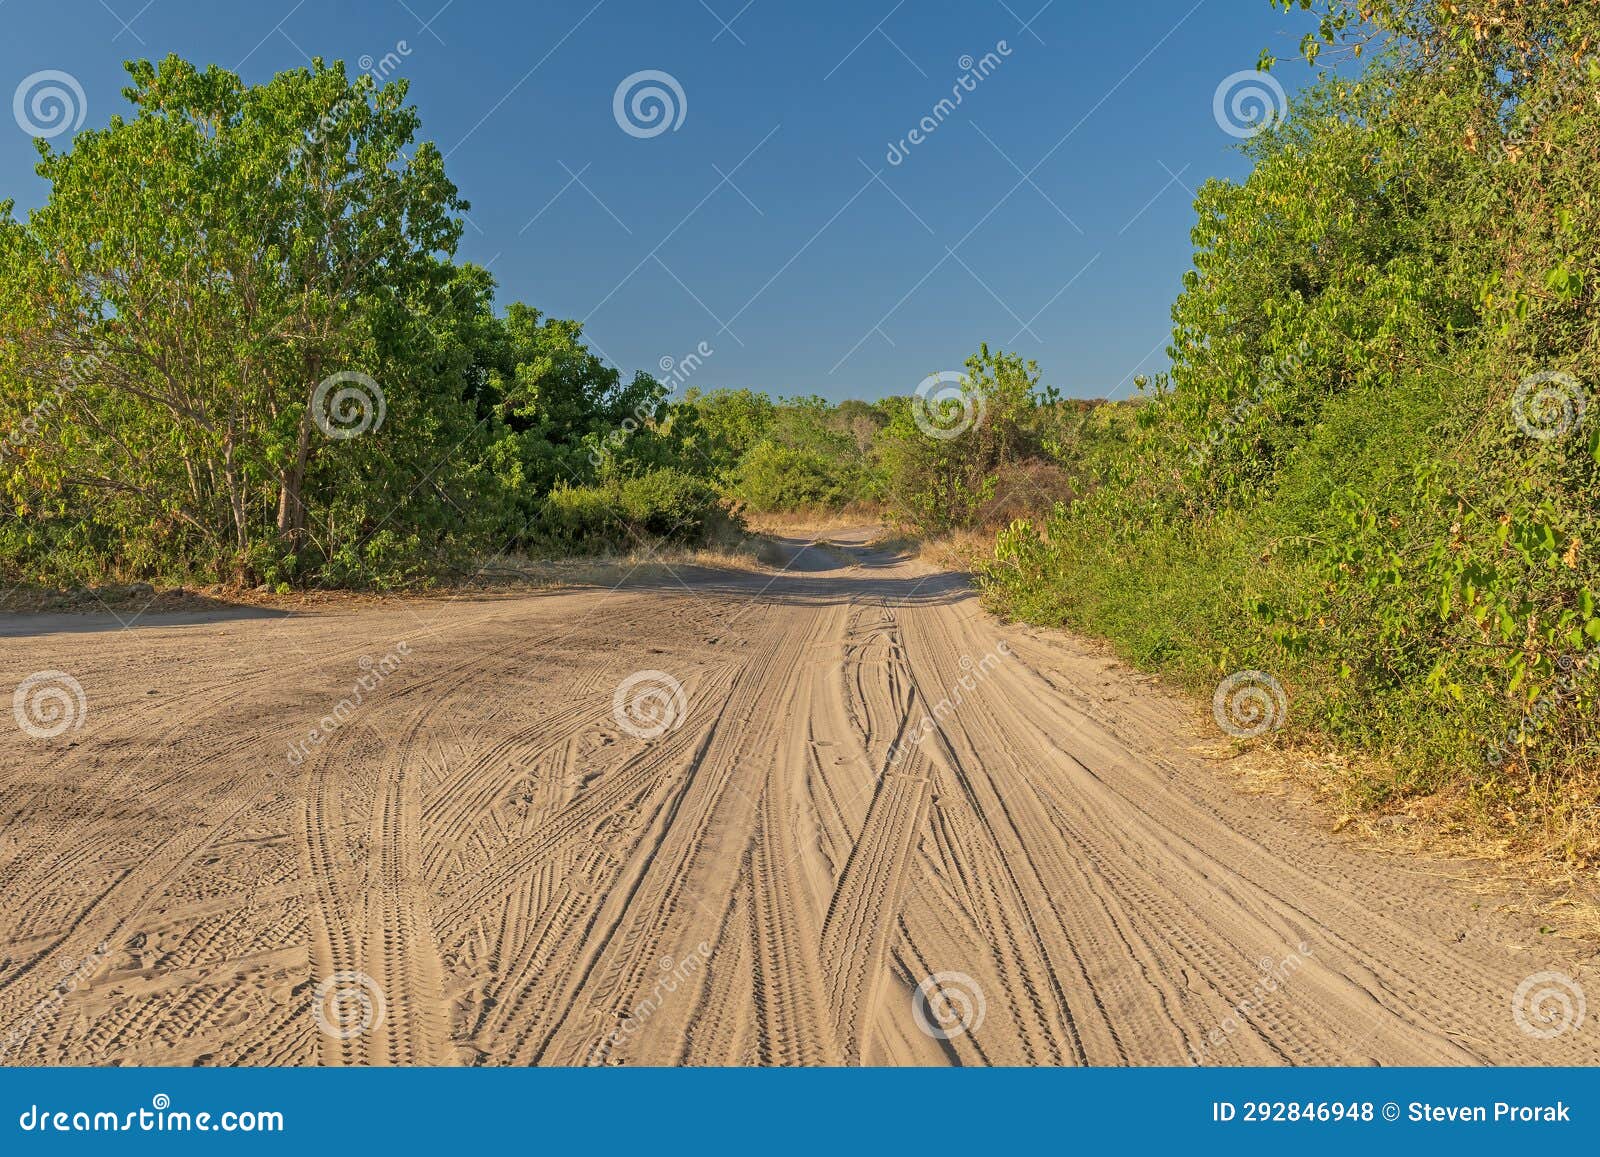 rural dirt road in the african veldt